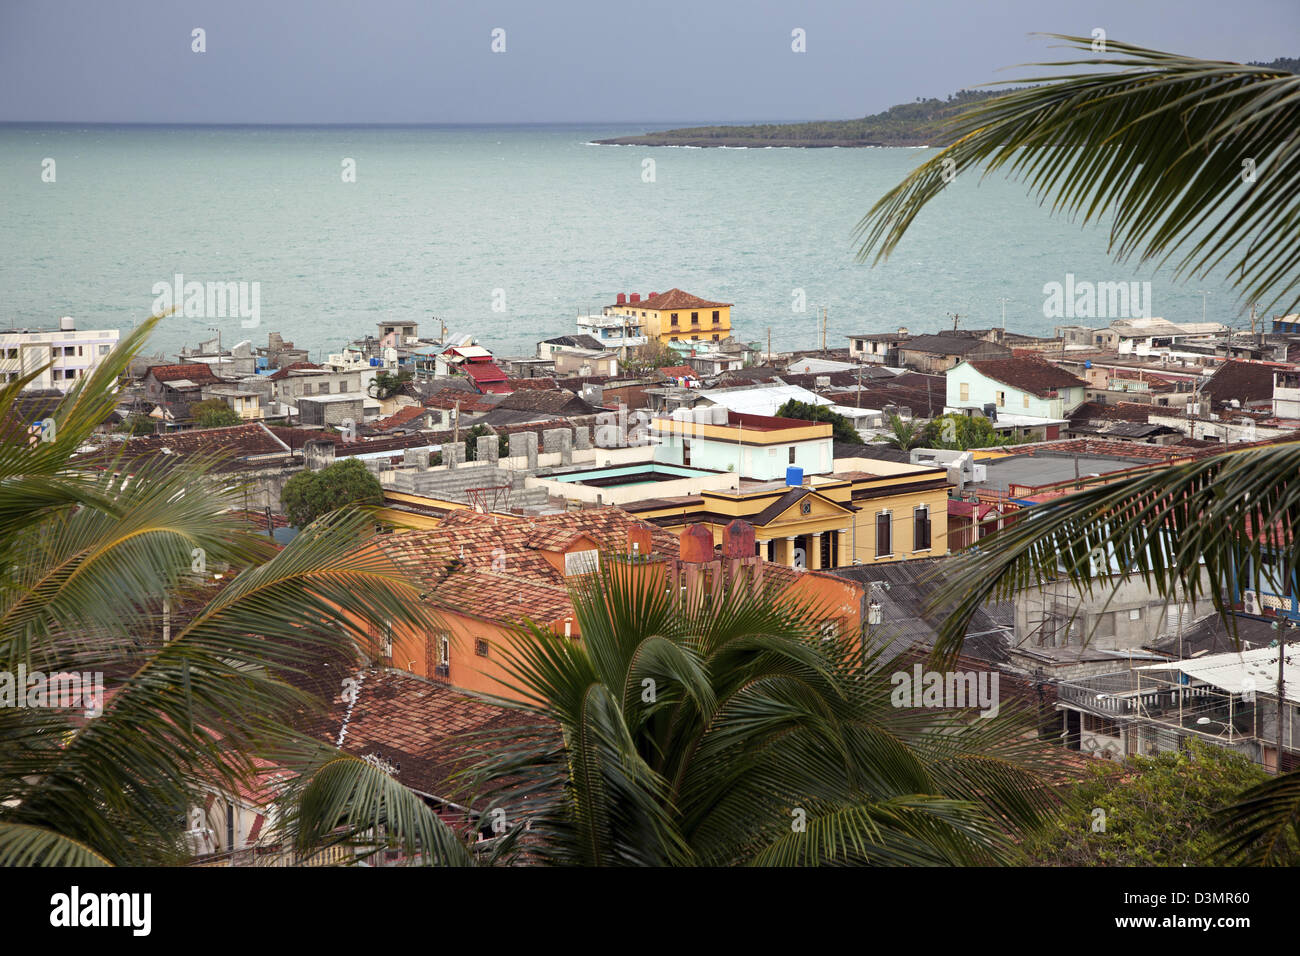 Vue sur la ville et la baie de Baracoa Miel / Bahía de miel, la province de Guantánamo, Cuba, Caraïbes Banque D'Images